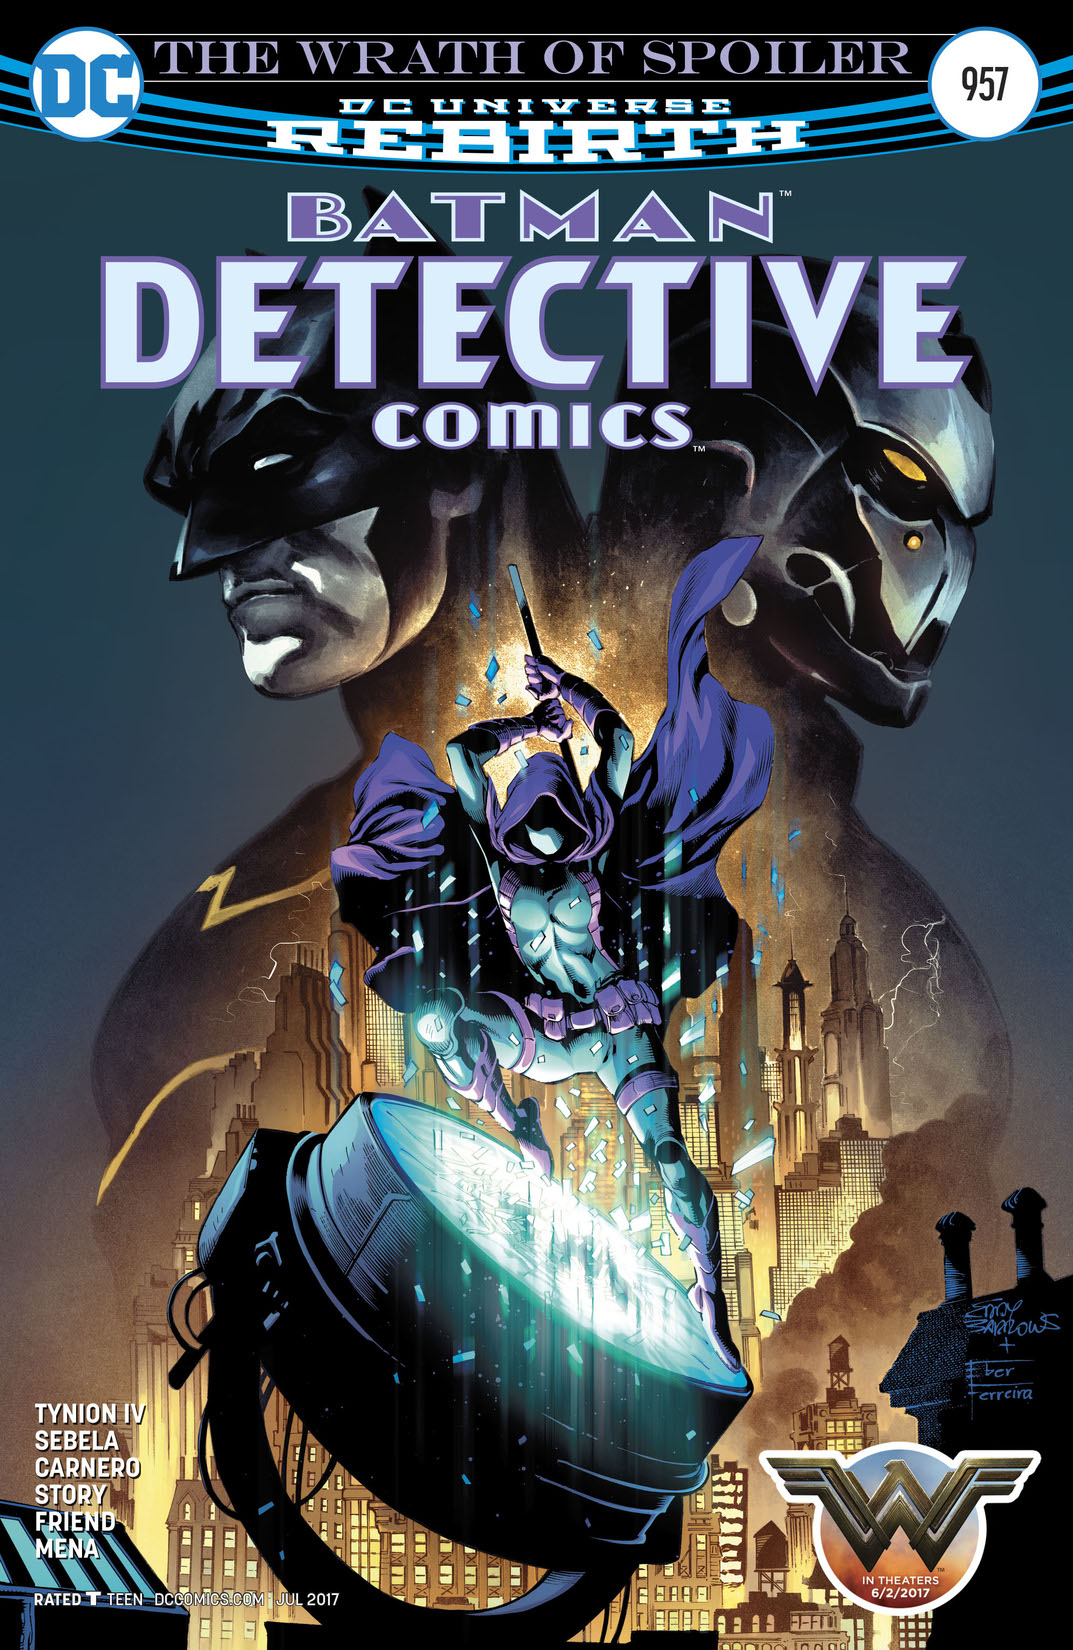 Detective Comics (2016-) #957 preview images